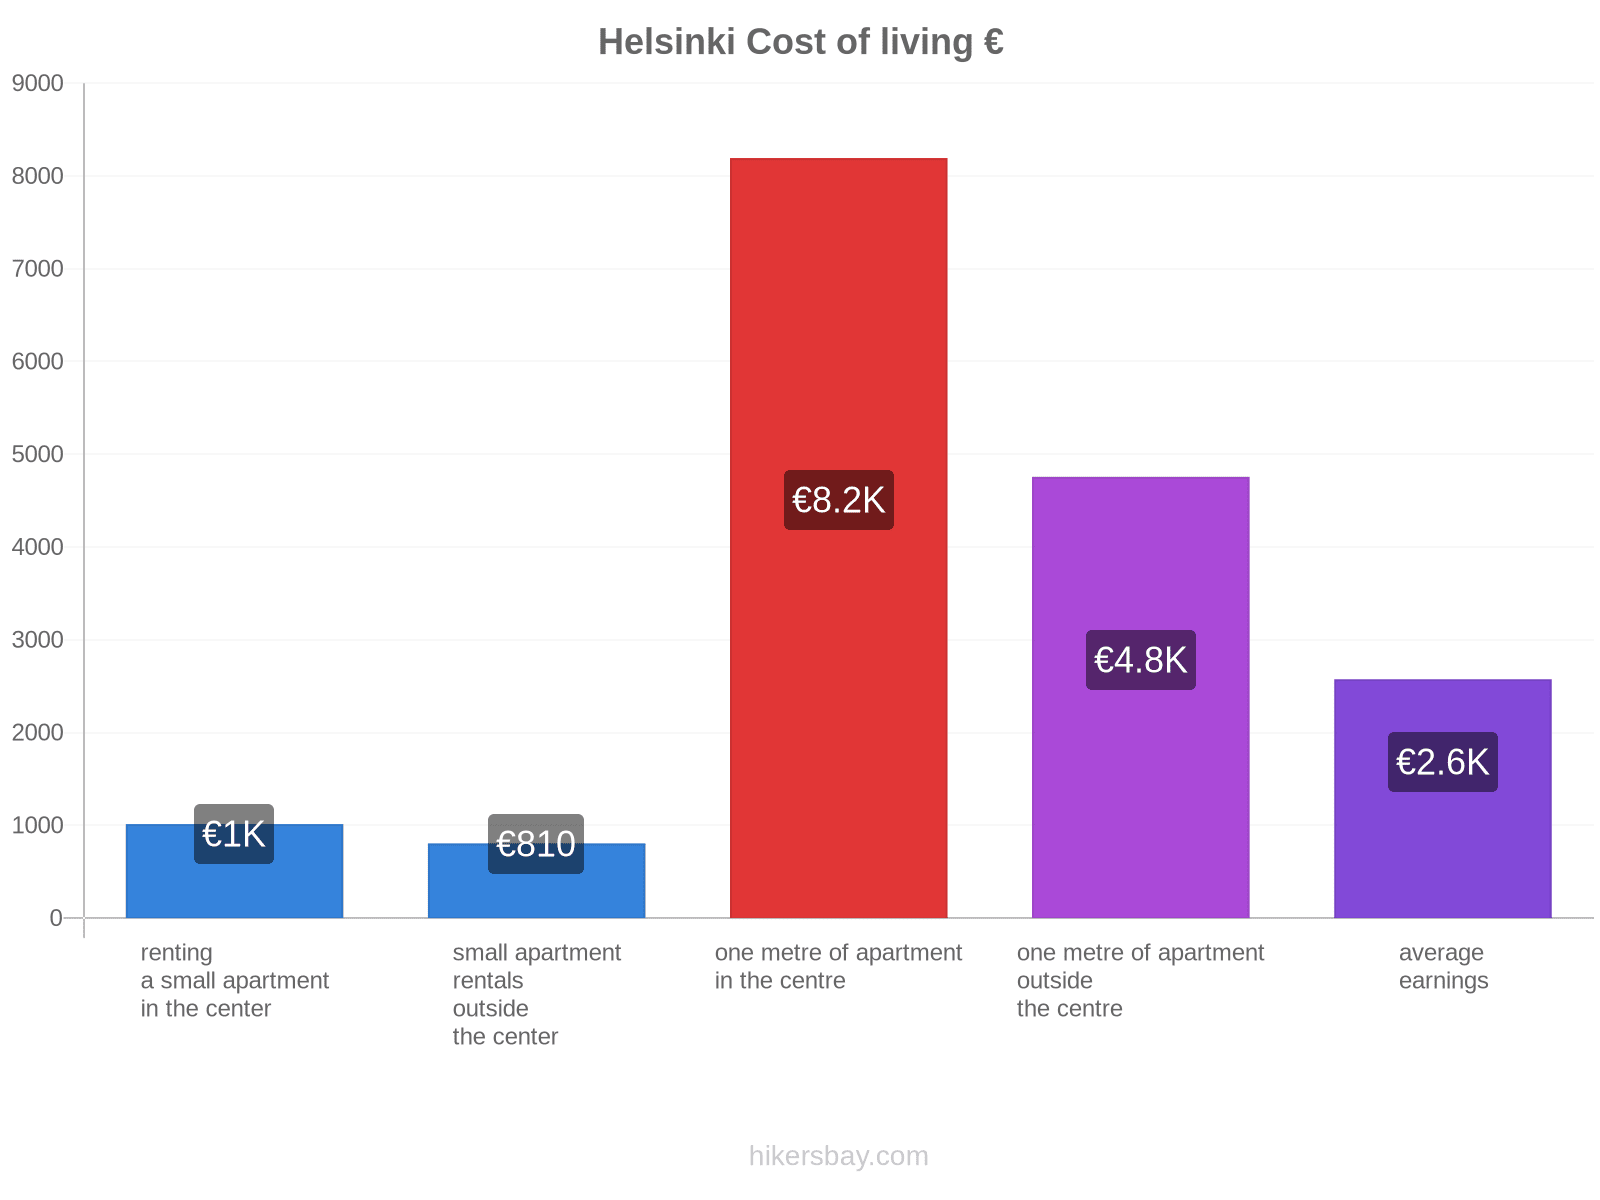 Helsinki cost of living hikersbay.com